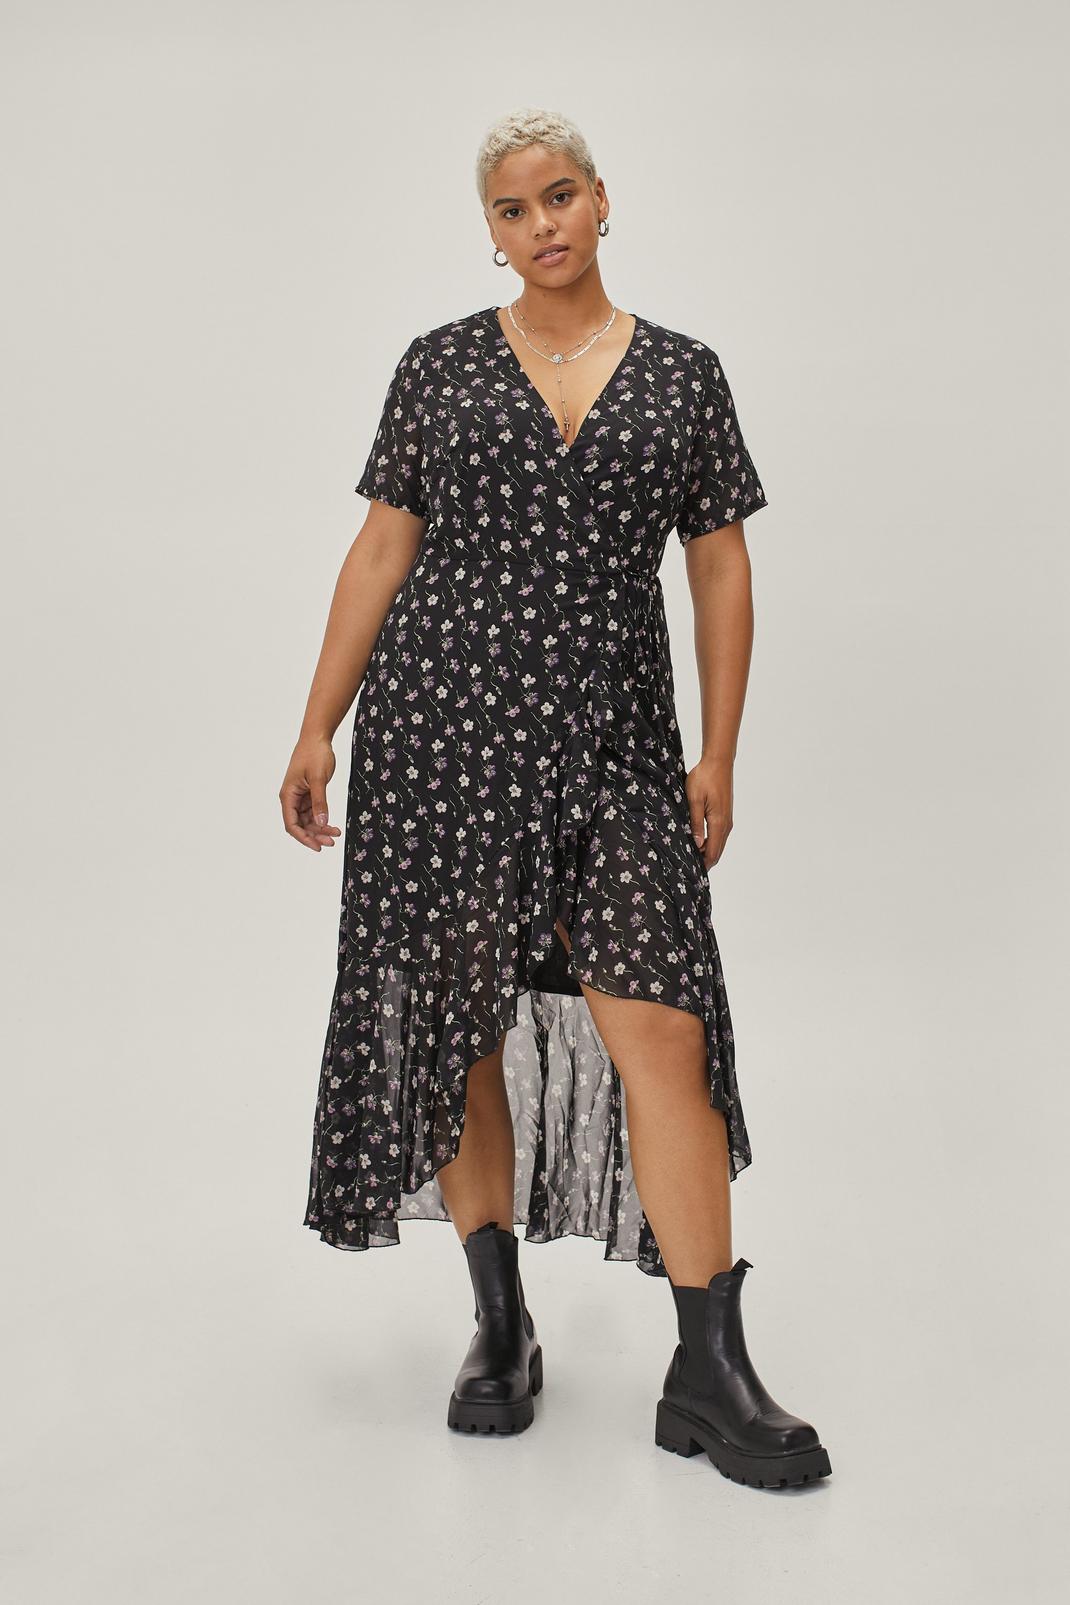 Black Budding Artist Plus Size Floral Maxi Dress image number 1